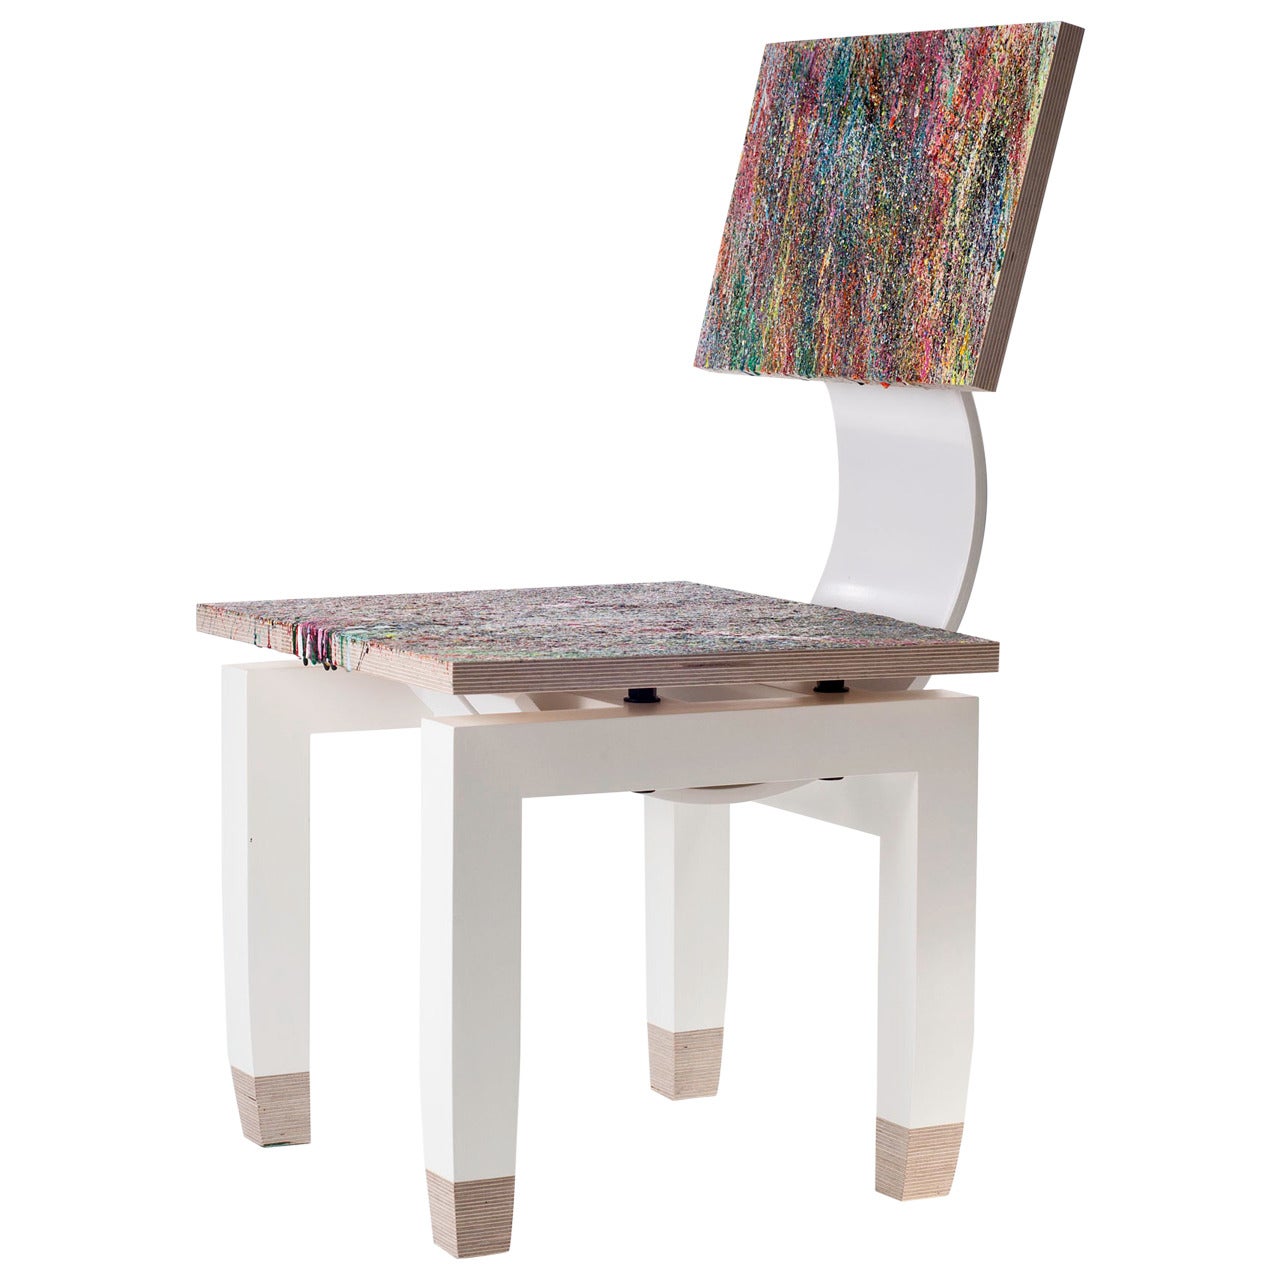 Splatter Chair by Markus Linnenbrink and Daniel Moyer For Sale